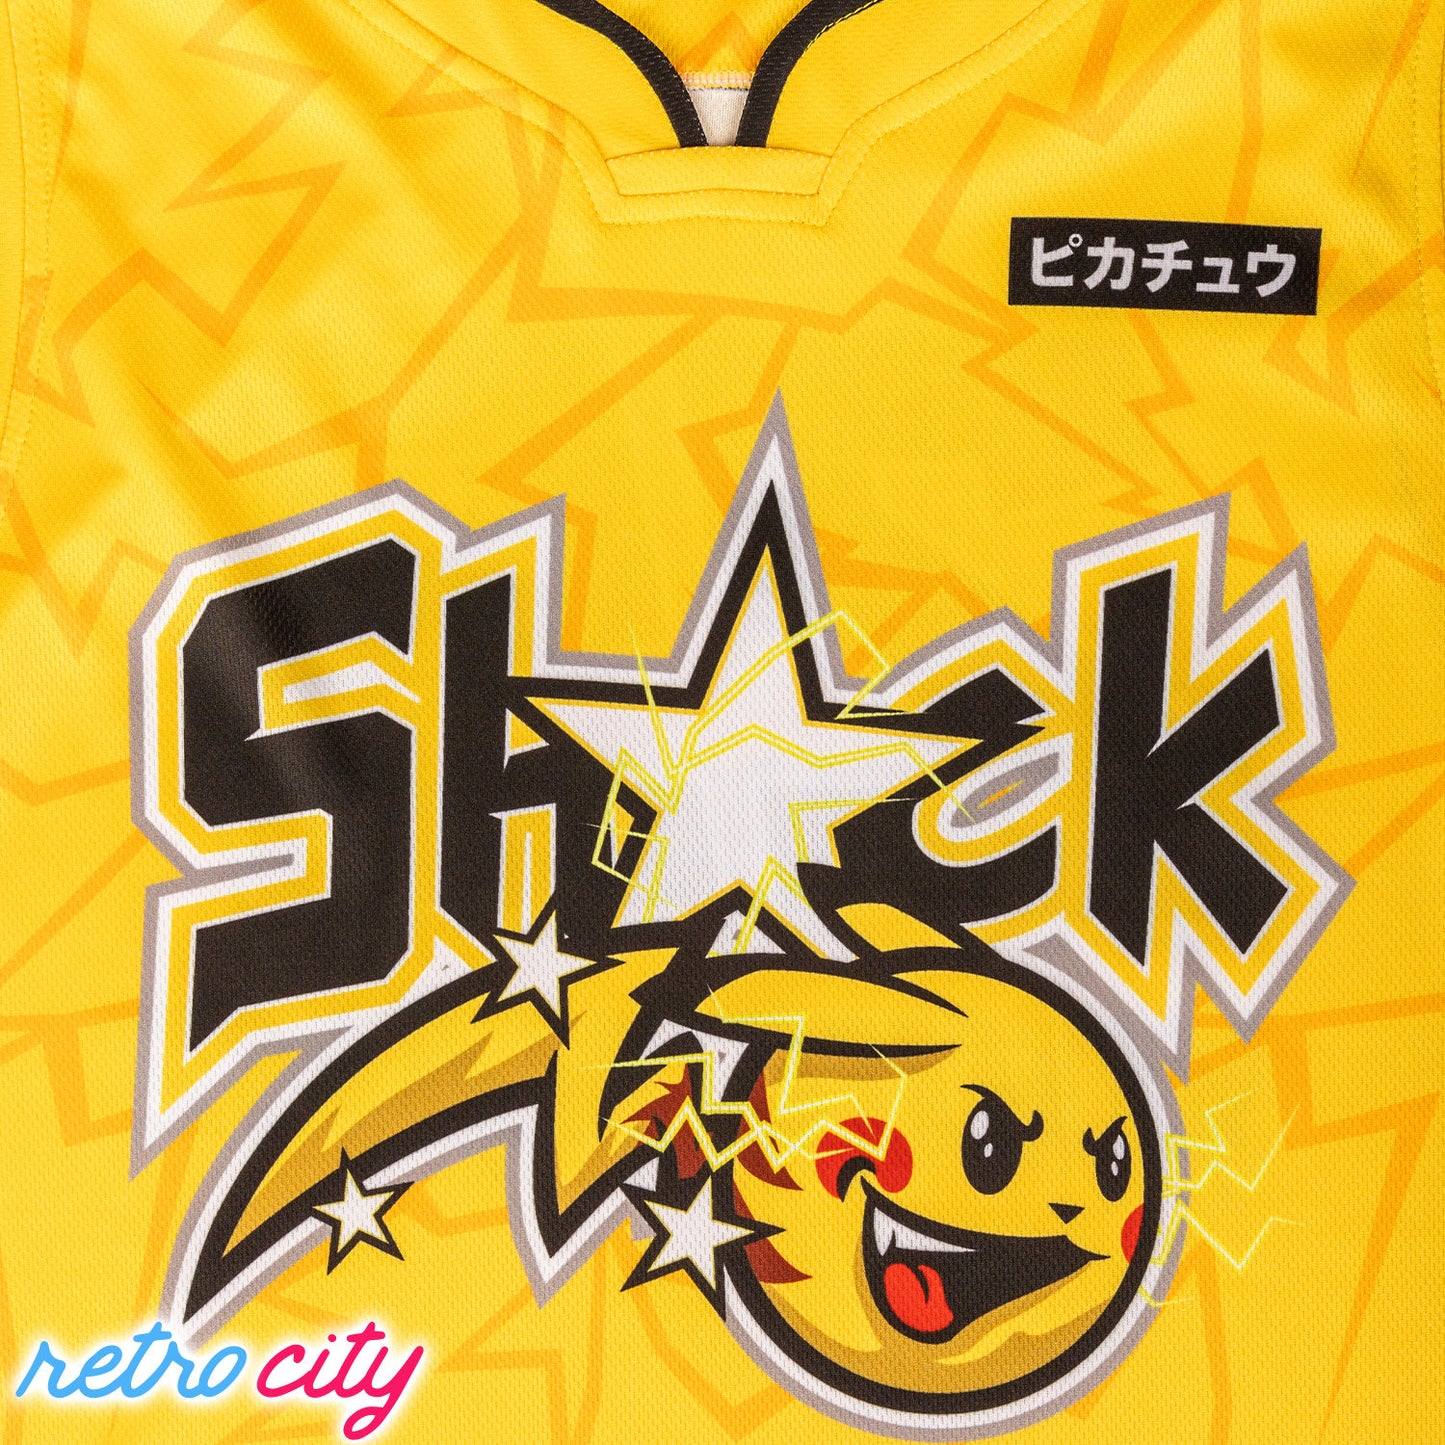 Shock Pikachu Pokémon Basketball Jersey *CUSTOM*